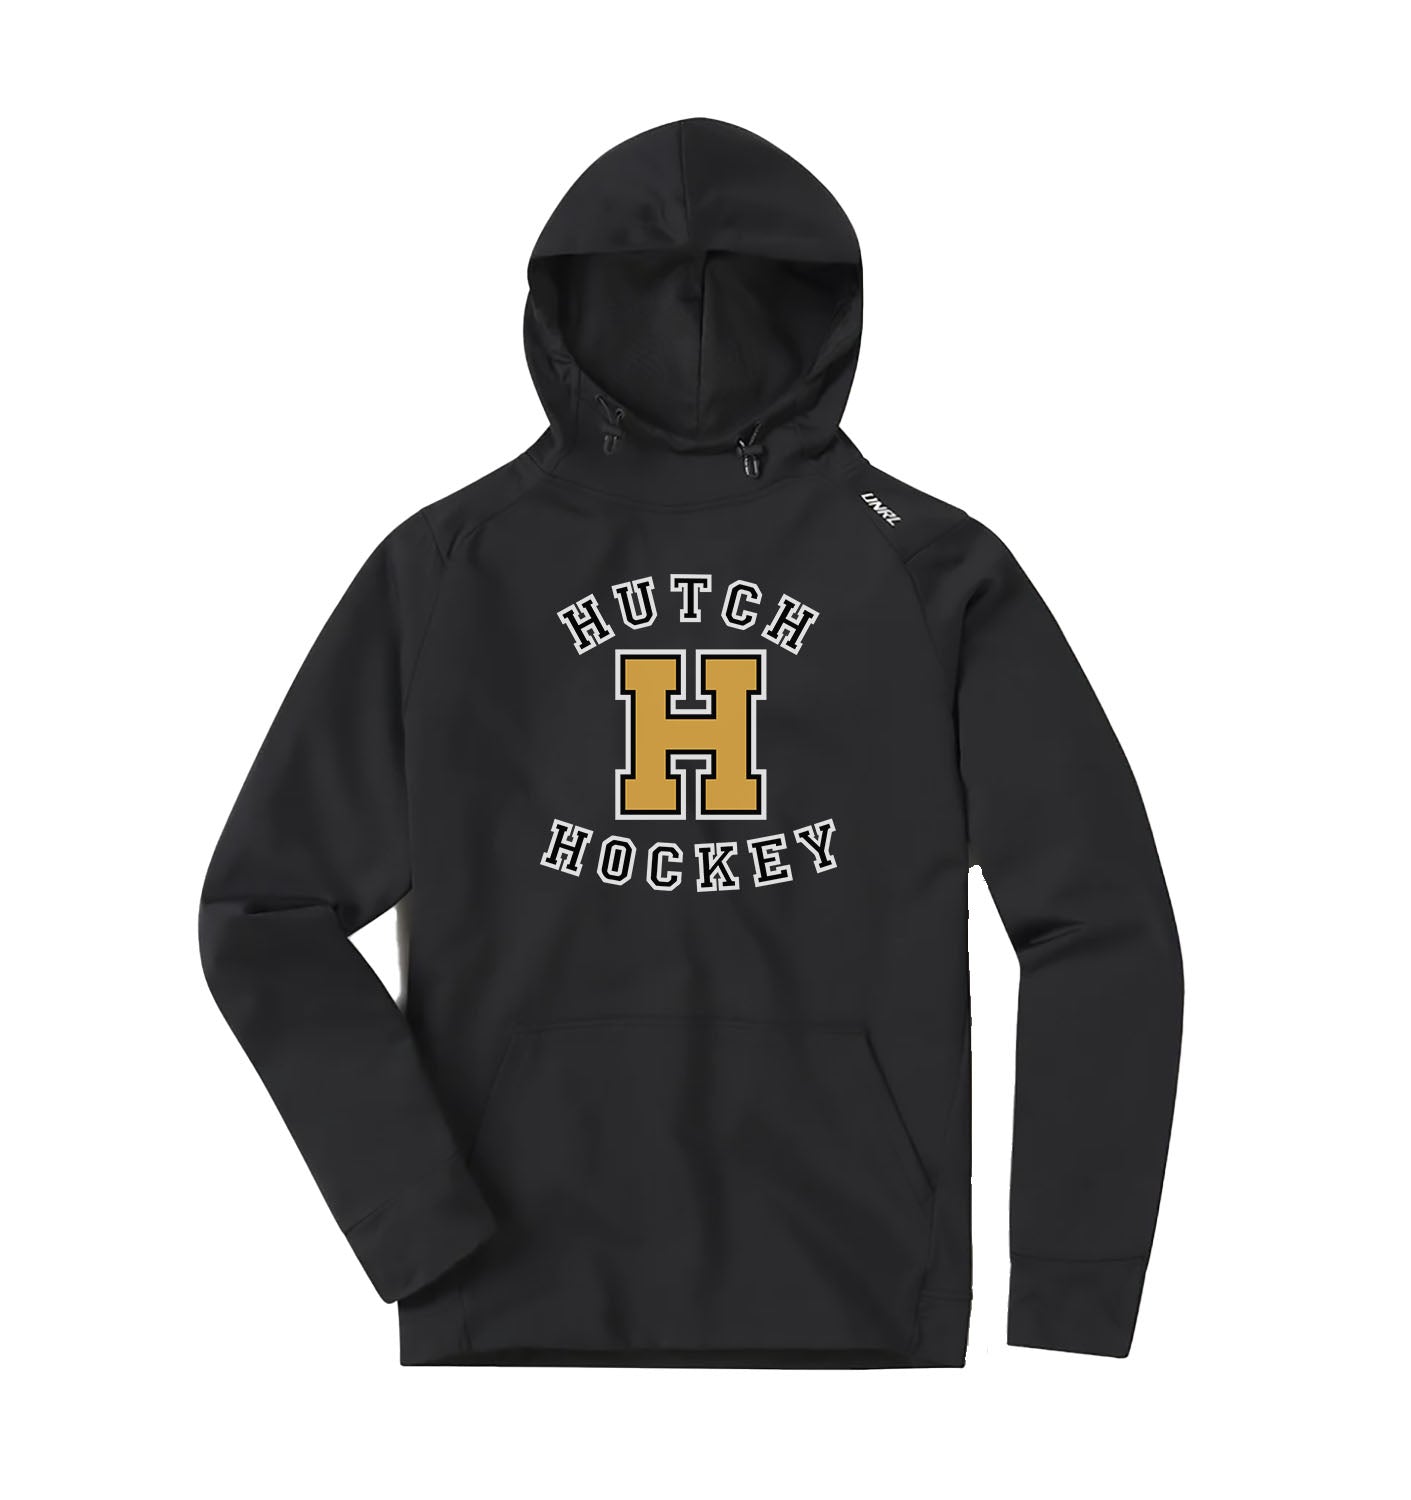 Hutchinson Girls Hockey // UNRL - Adult Crossover Hoodie